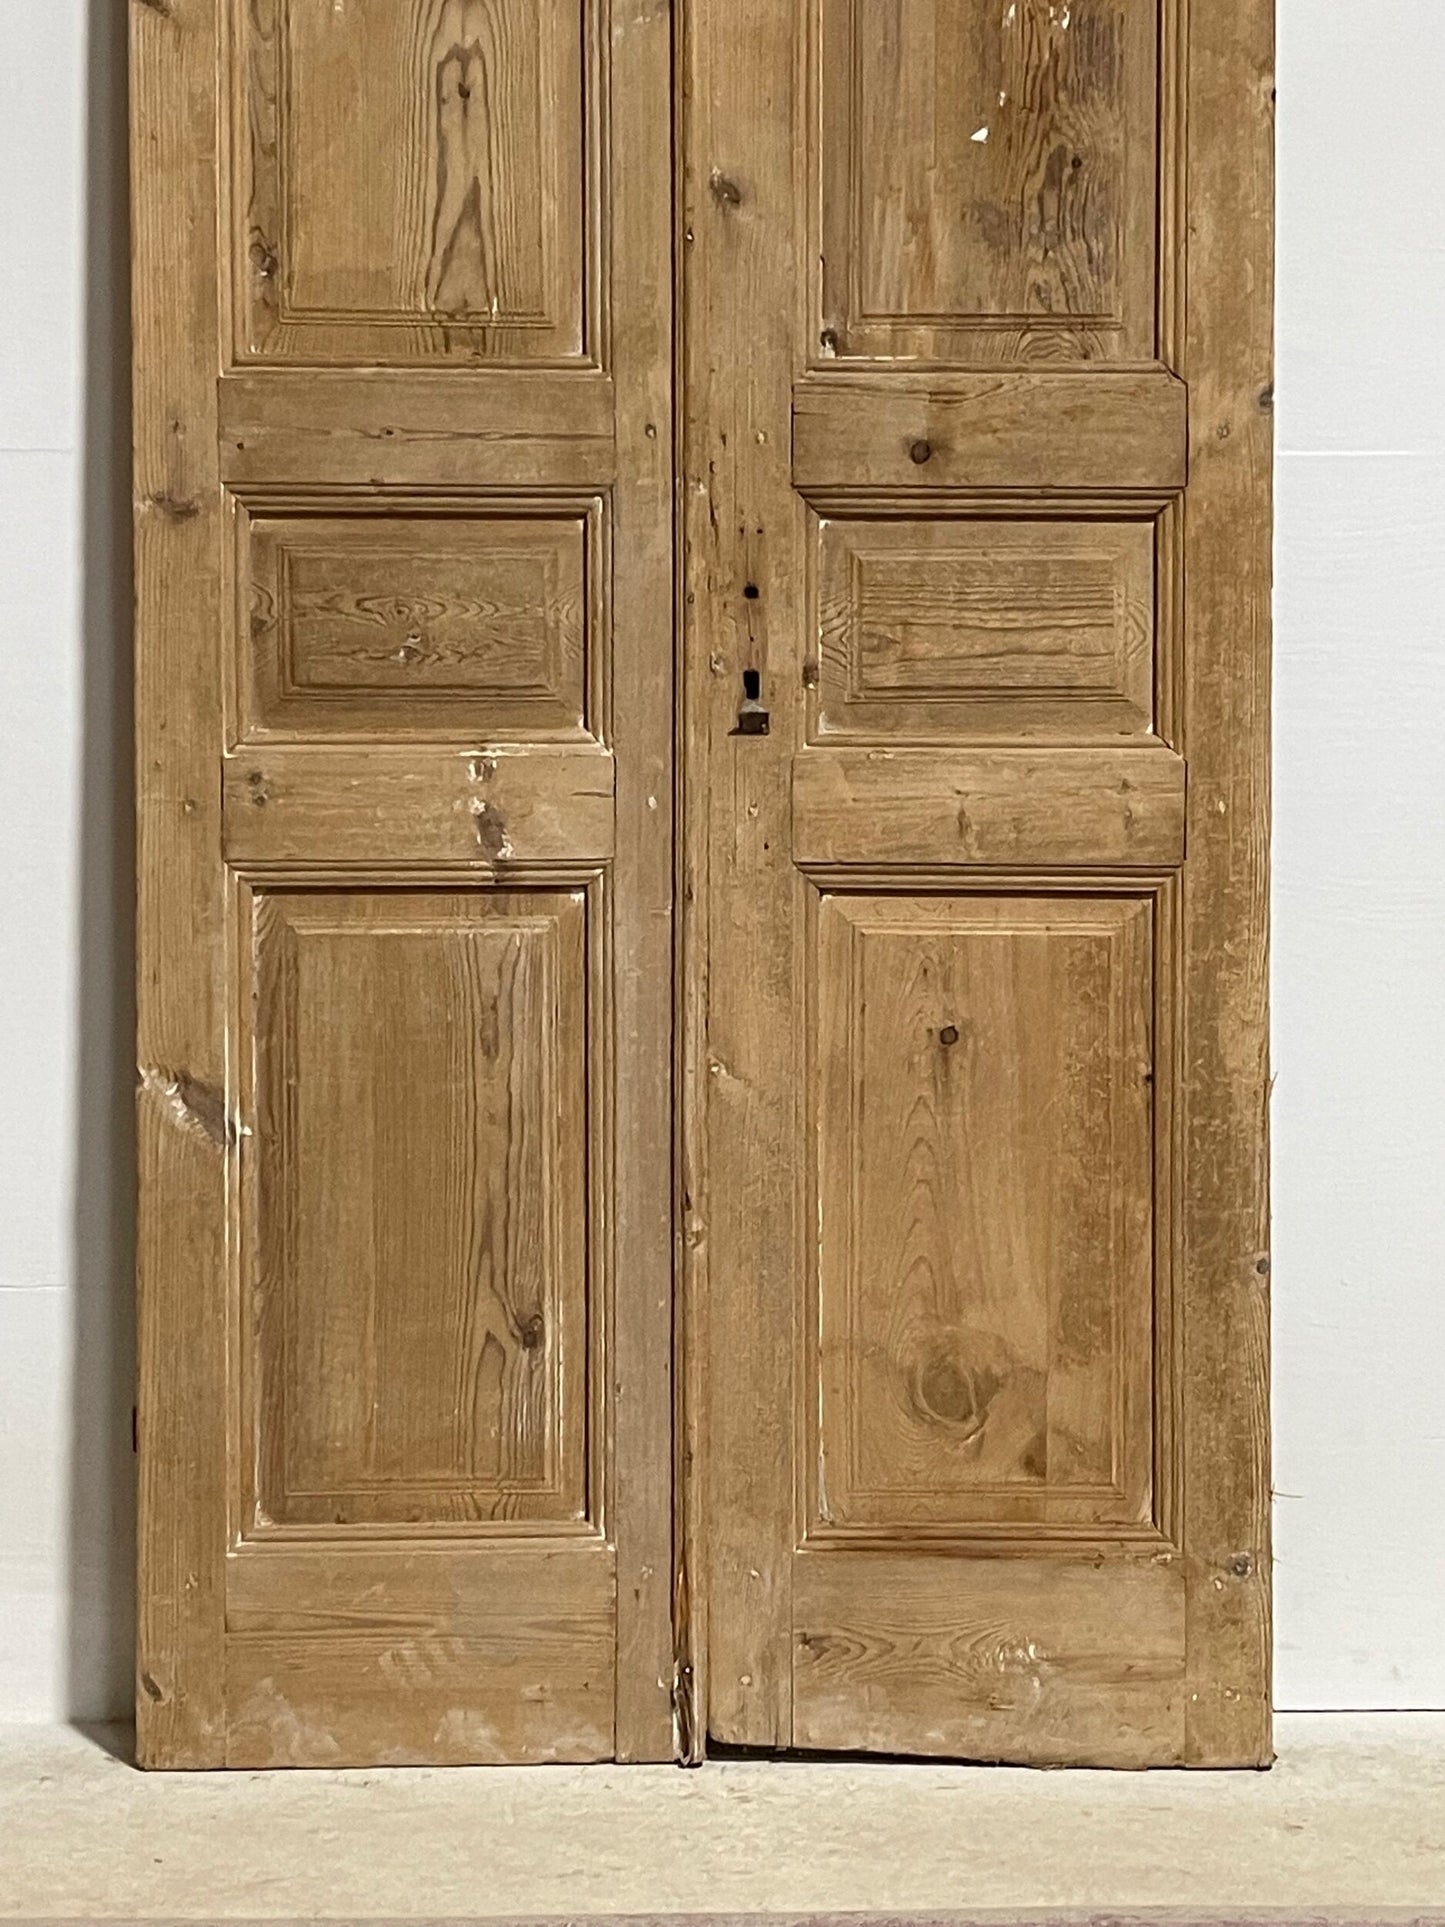 Antique French doors (93.25x41.25) H0092s